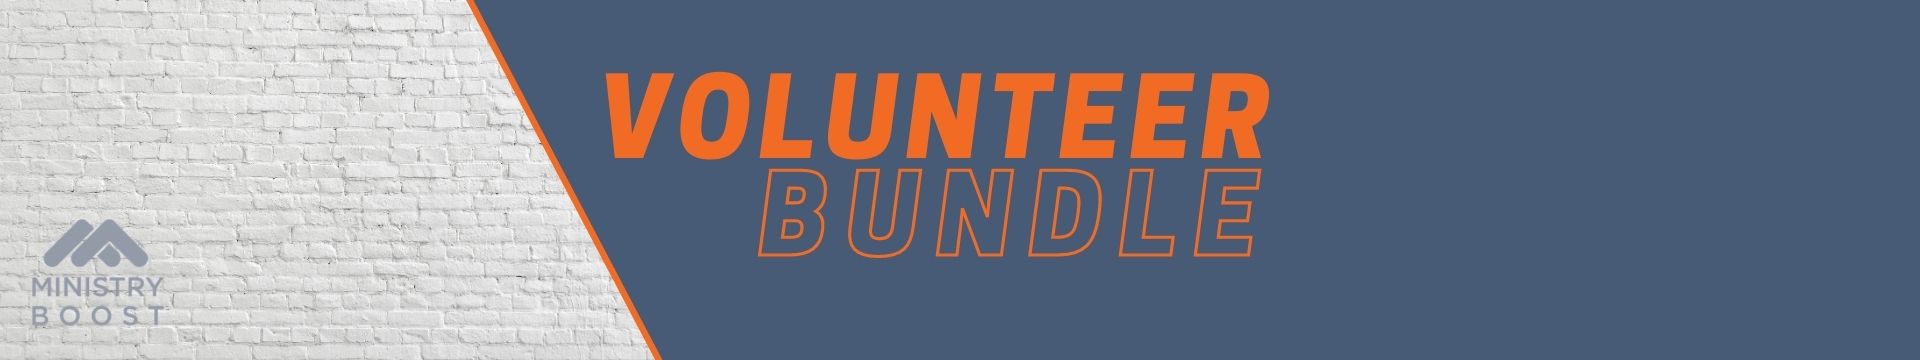 Volunteer Bundle 1920x360 1